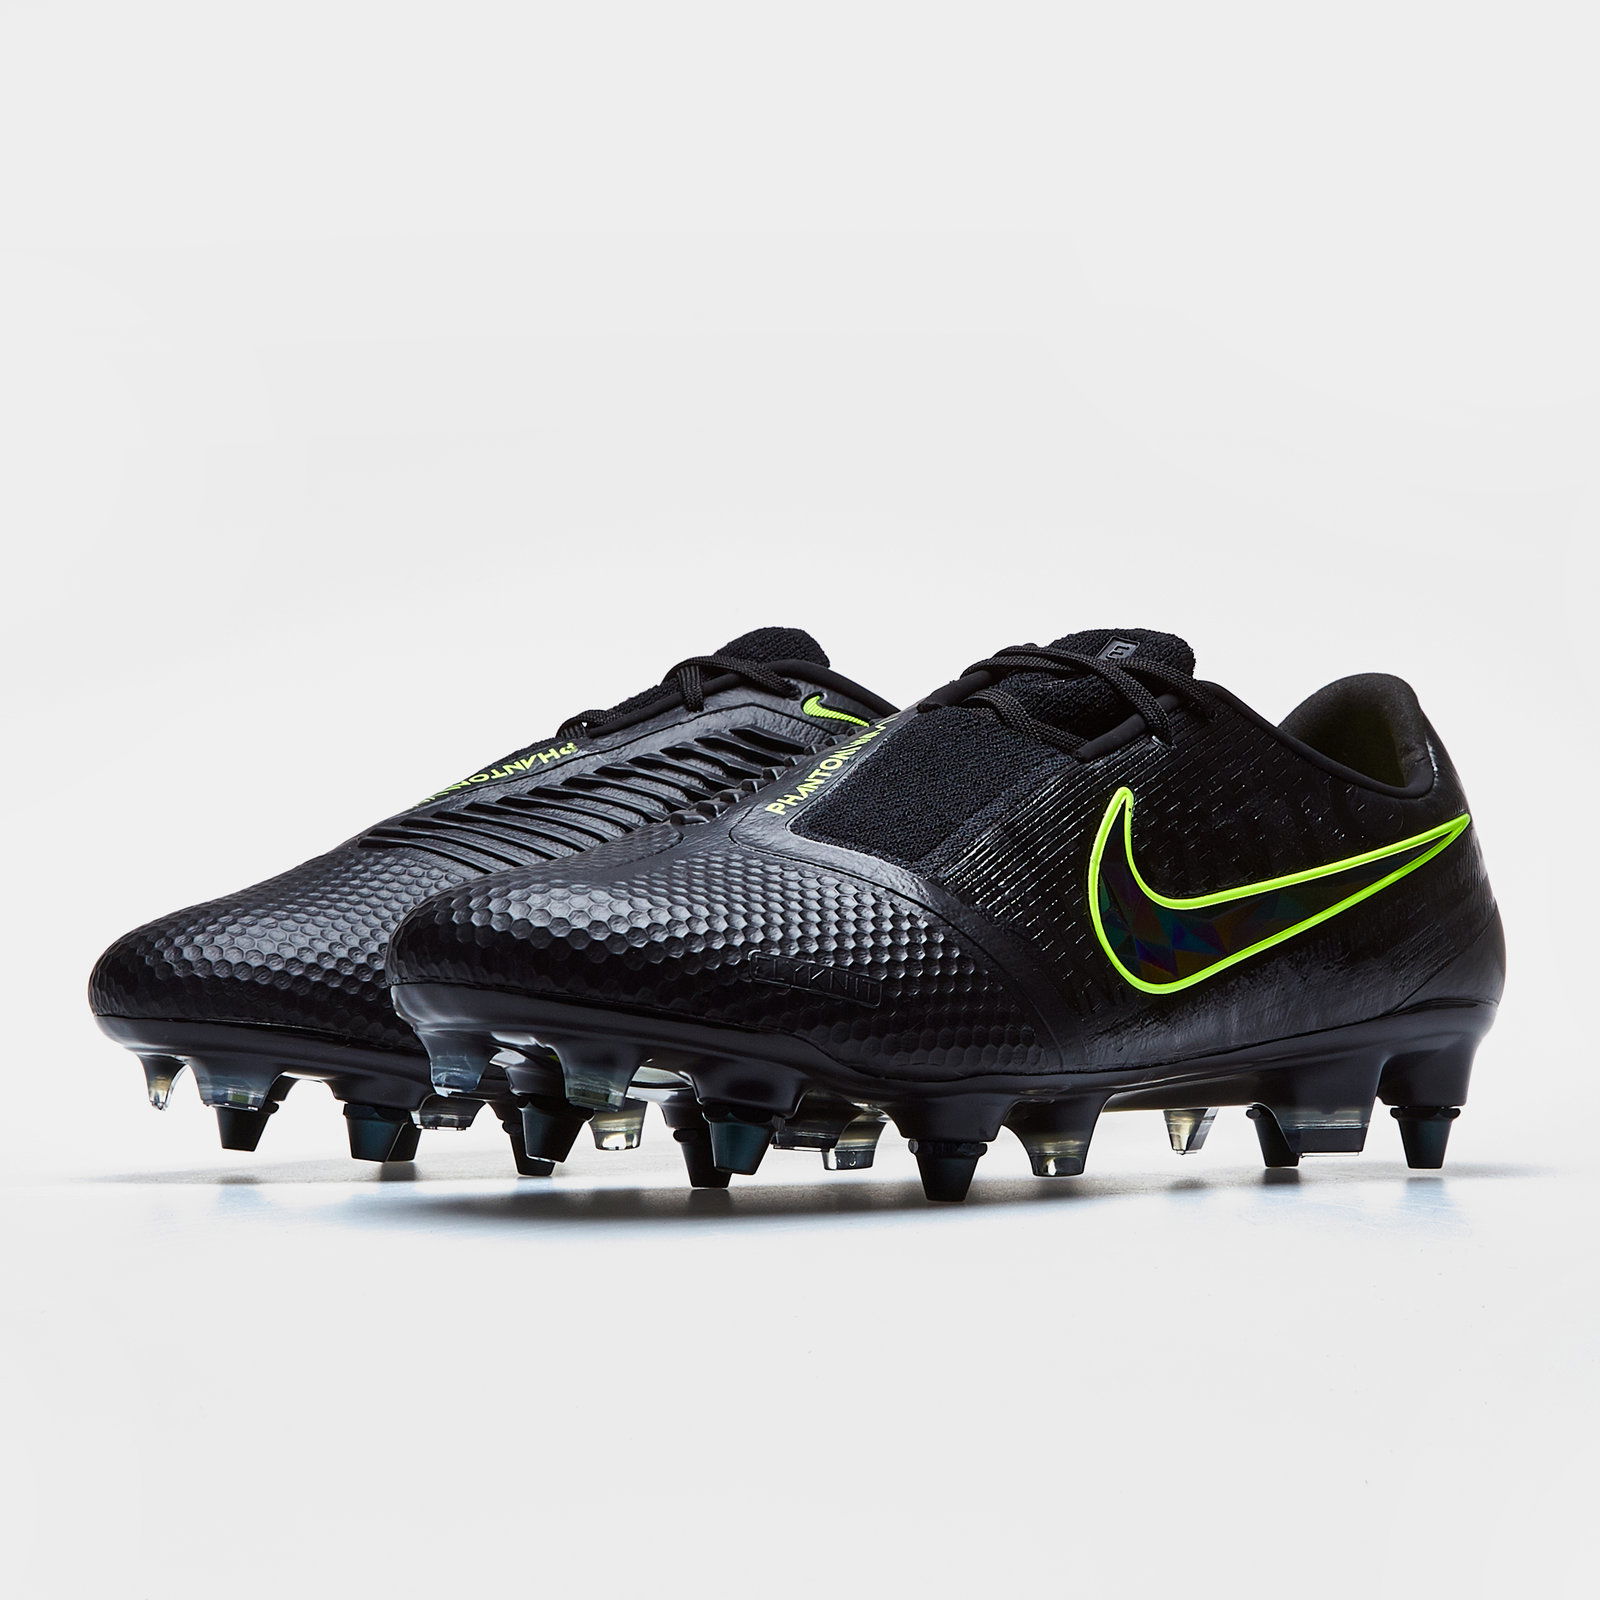 Nike Phantom Venom Elite SG Football Boots Black/Volt, £115.00